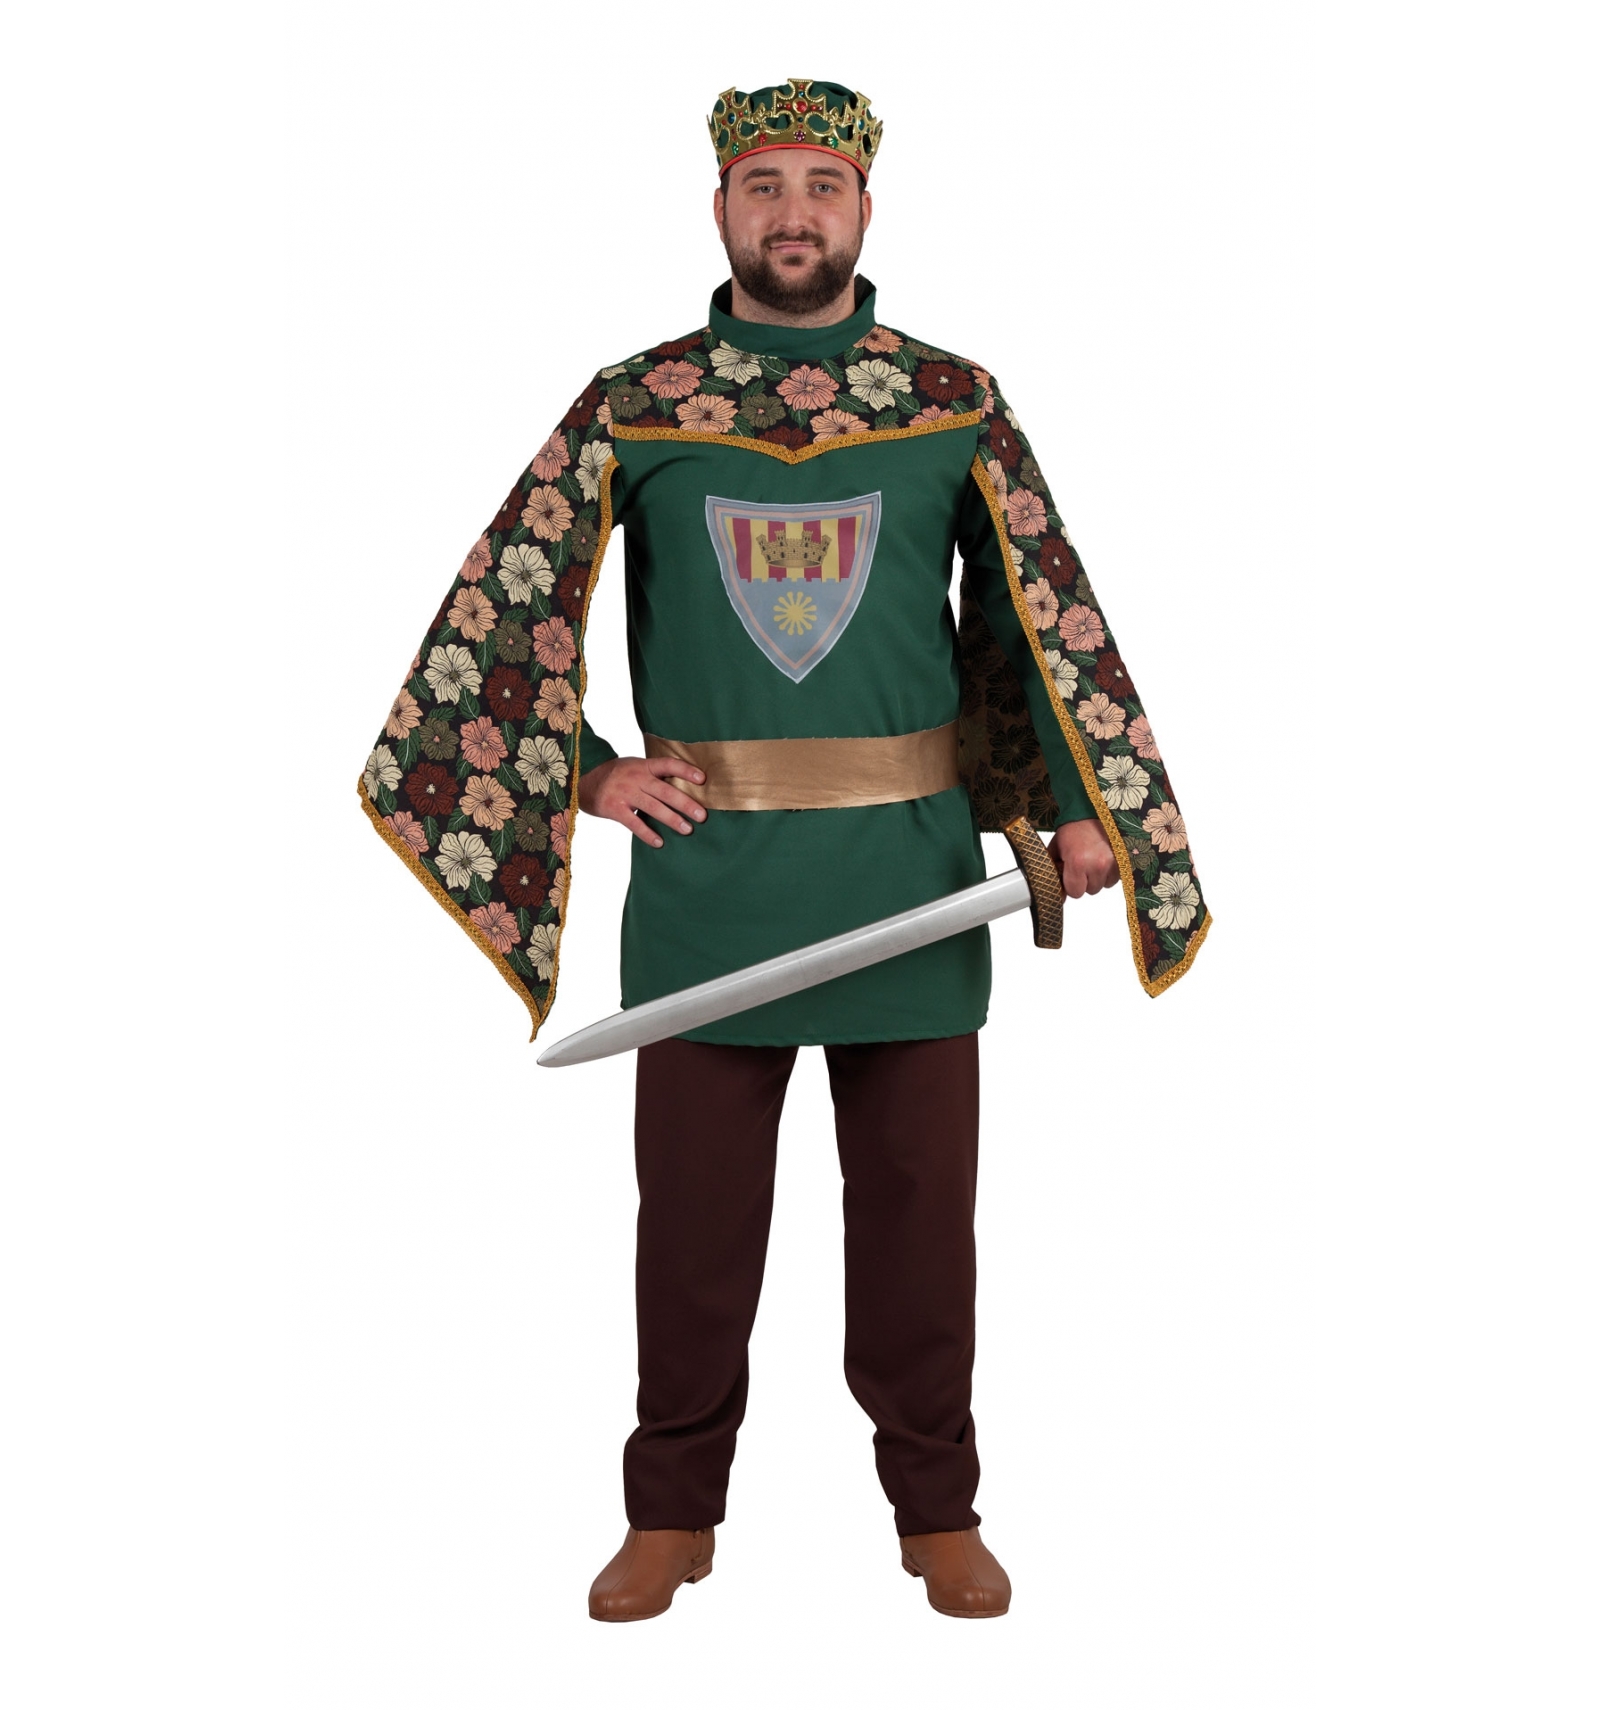 Medieval Prince Costume